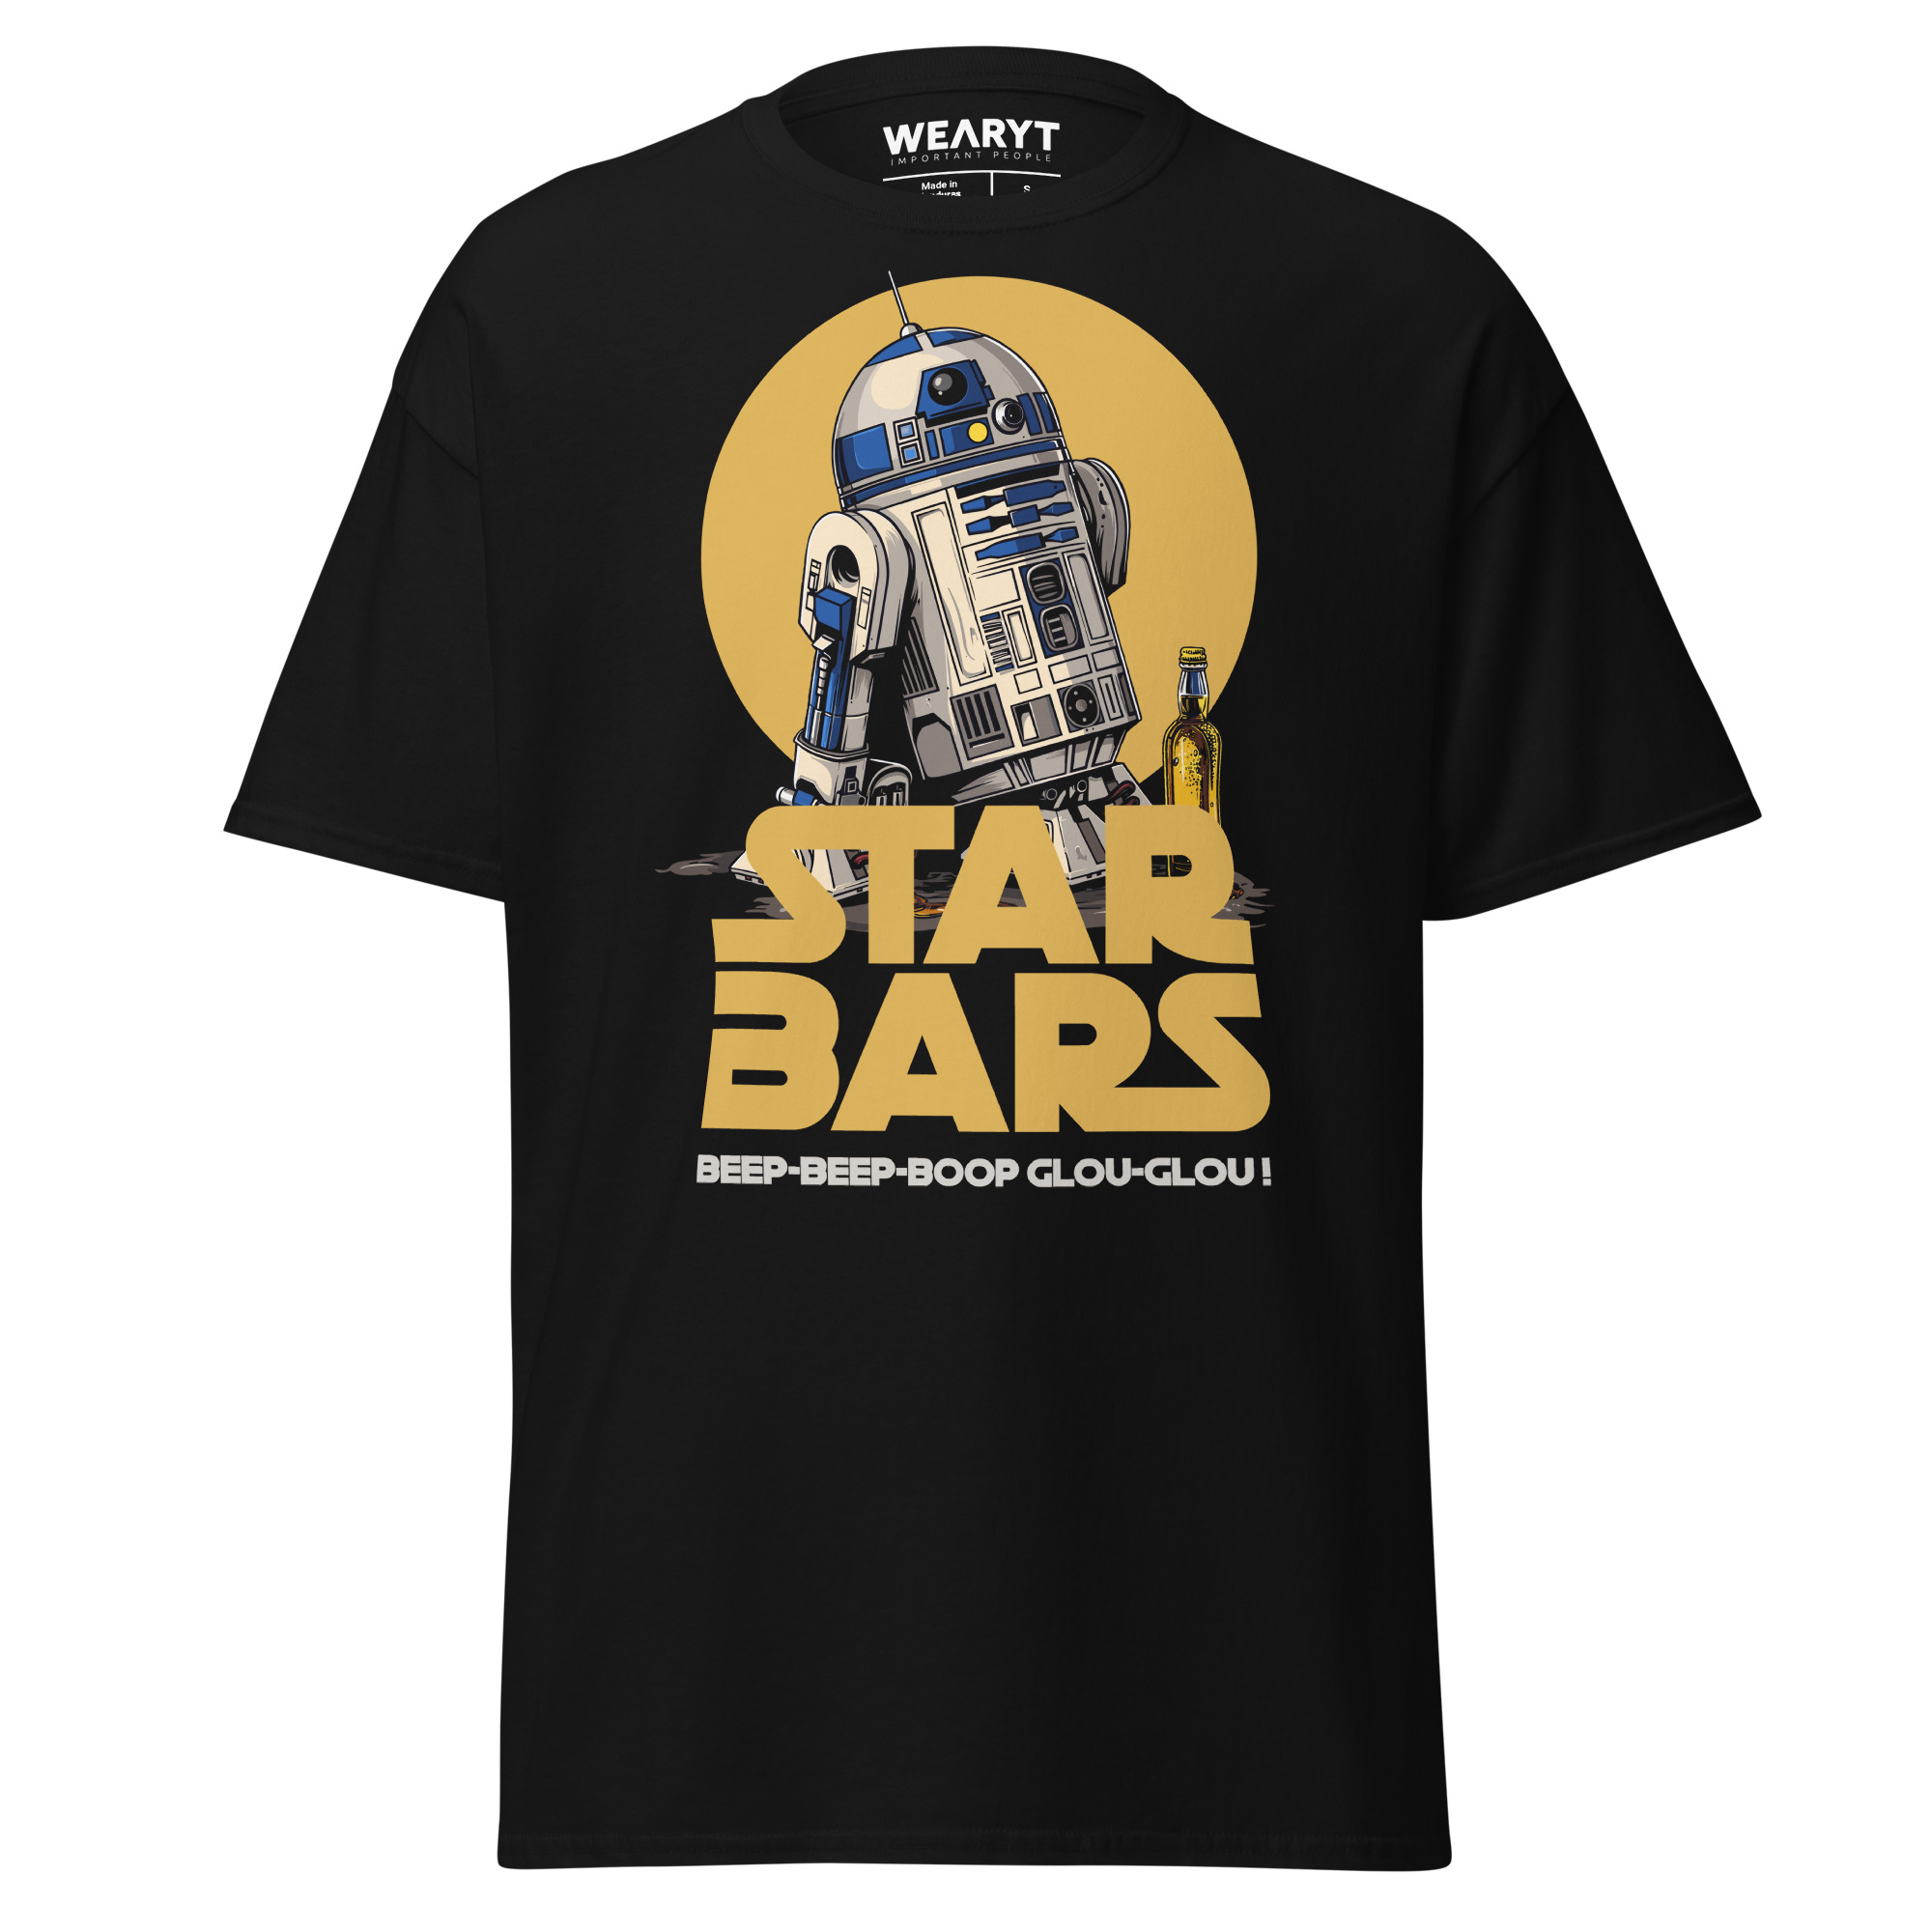 T-shirt – Star Bars – Beep-beep-boop Glou-glou ! T-Shirts Wearyt